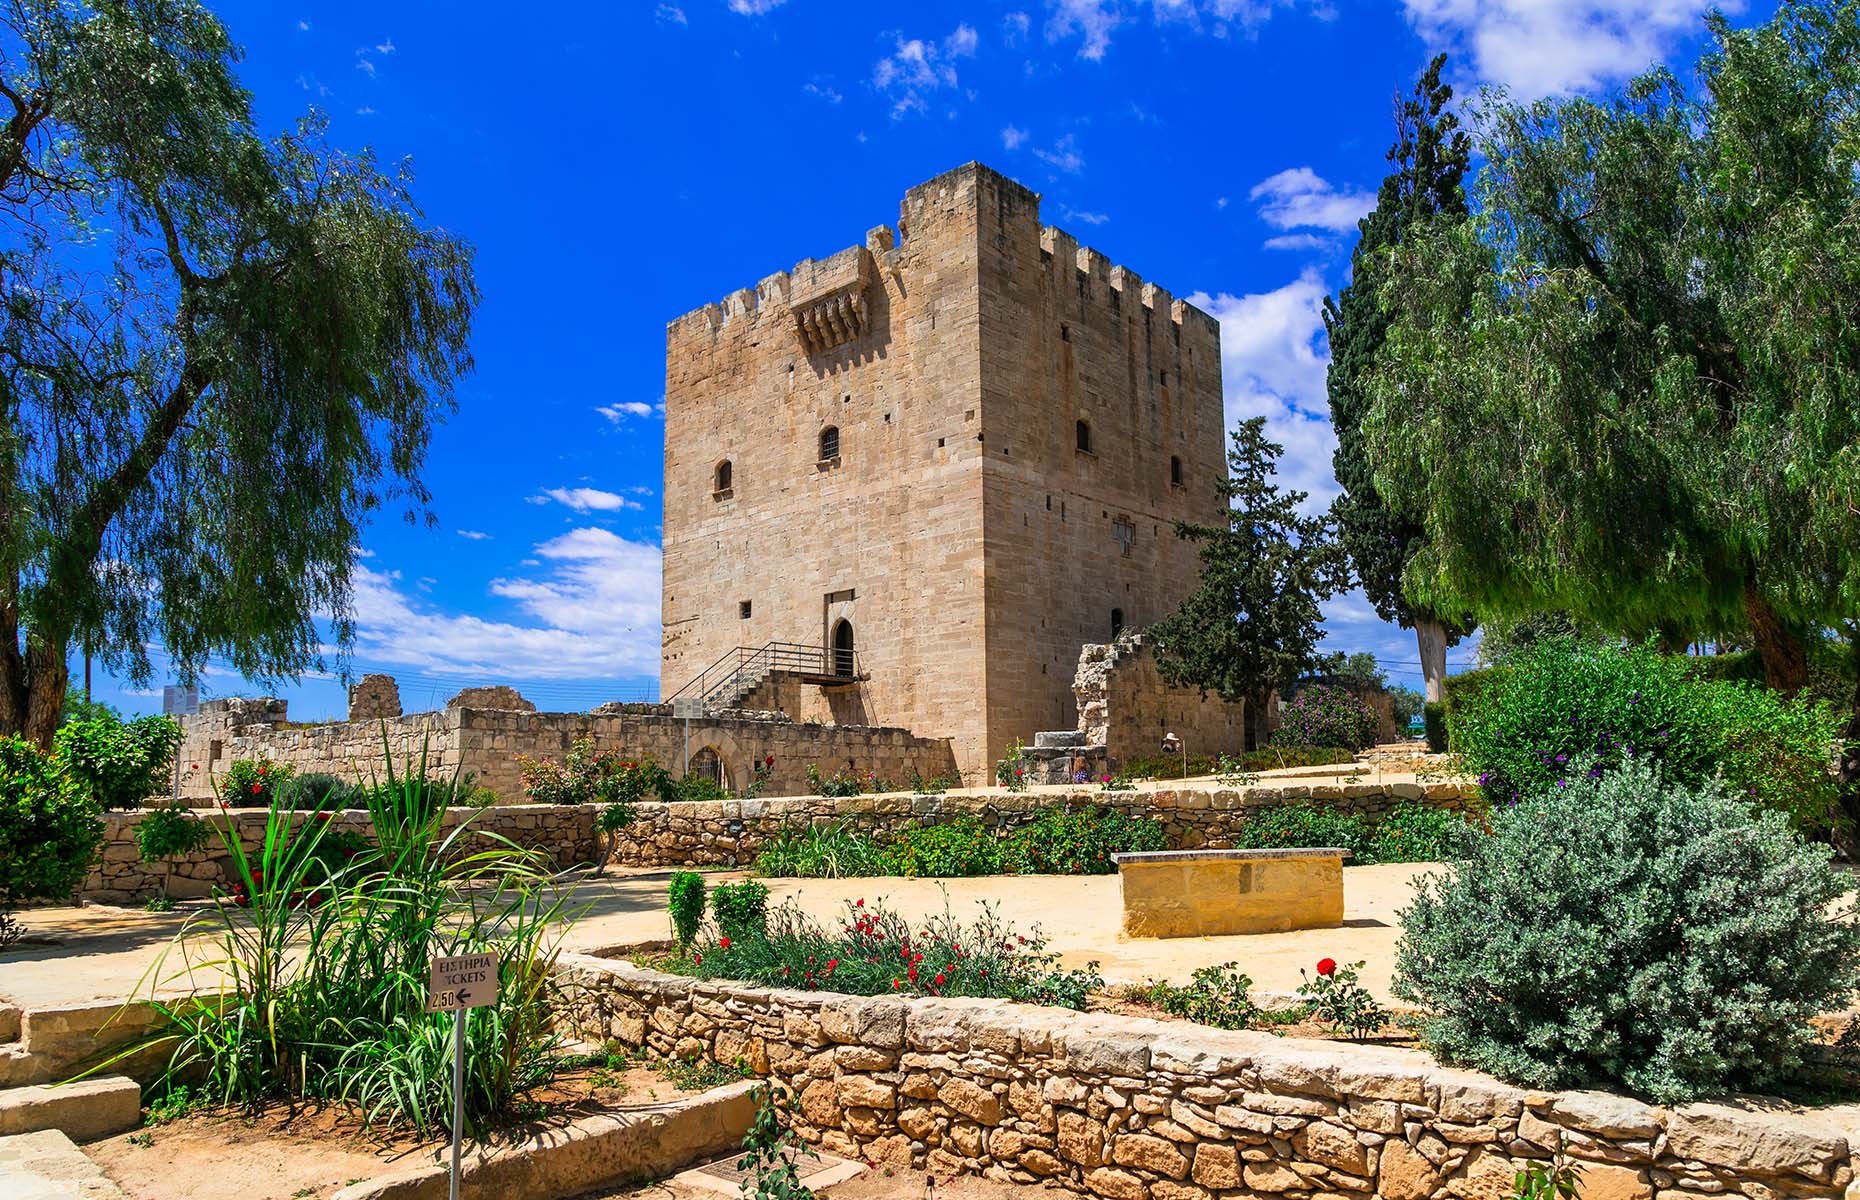 Kolossi Castle (Image: leoks/Shutterstock)